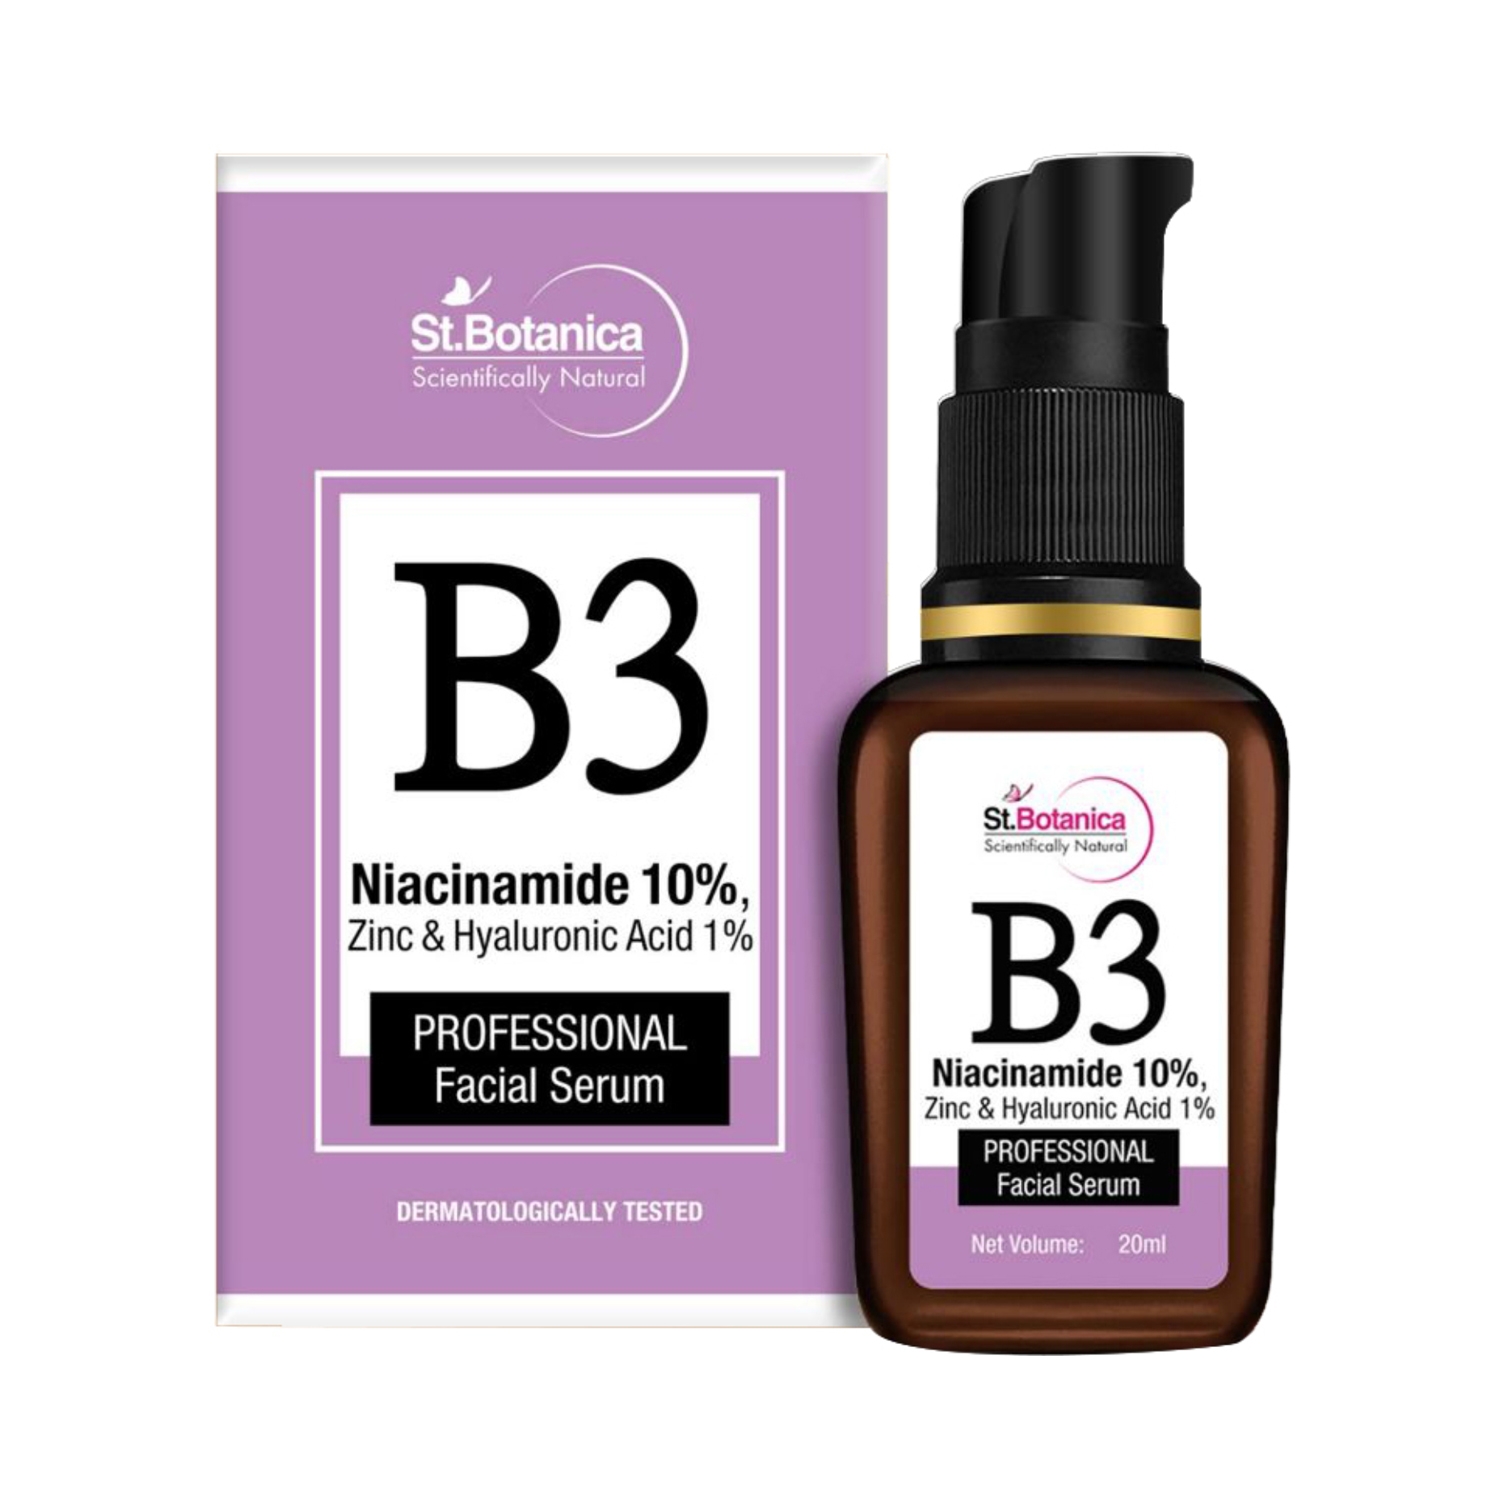 St.Botanica | St.Botanica B3 Niacinamide 10%, Zinc & Hyaluronic Acid 1% Professional Face Serum (20ml)